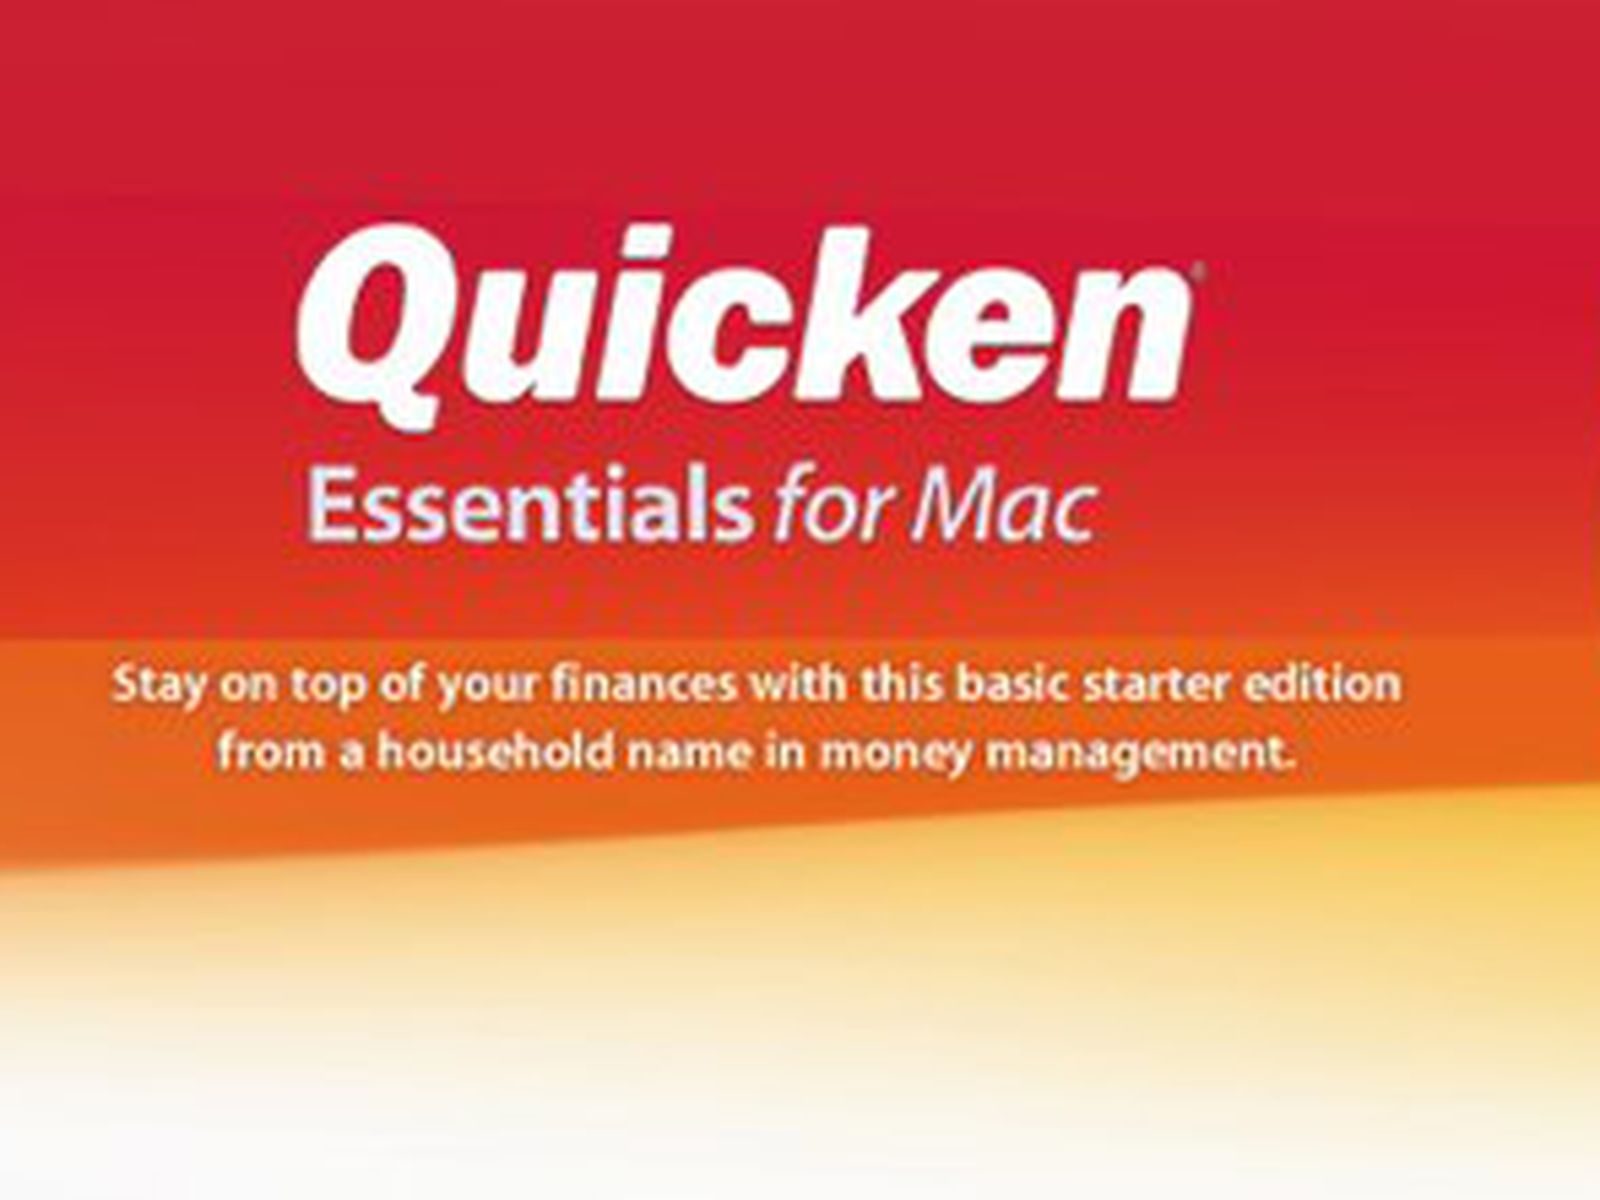 quicken essentials for mac 2010 review